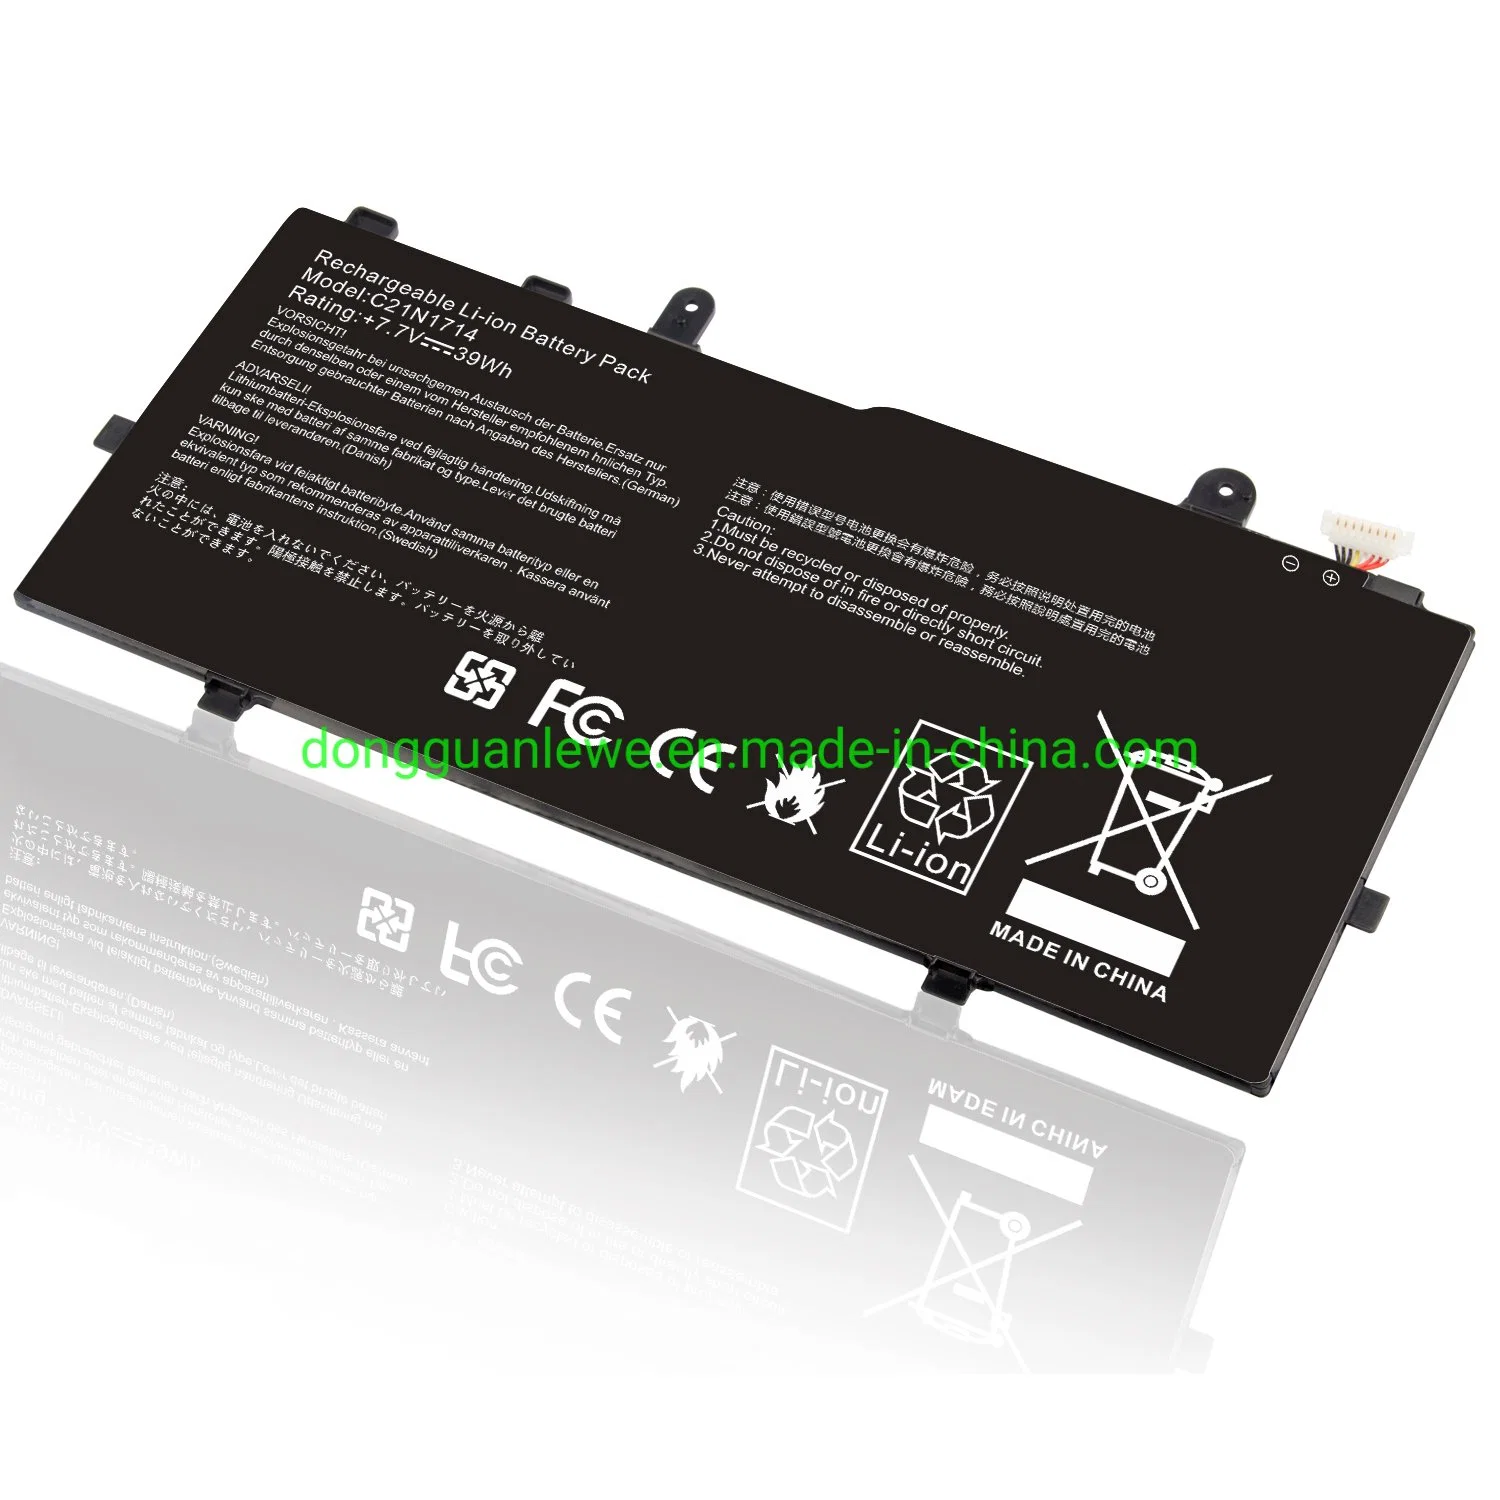 C21N1714 batería del portátil de sustitución para Asus tp401na J401mA TP401 J401ca tp401n portátil Batería de litio